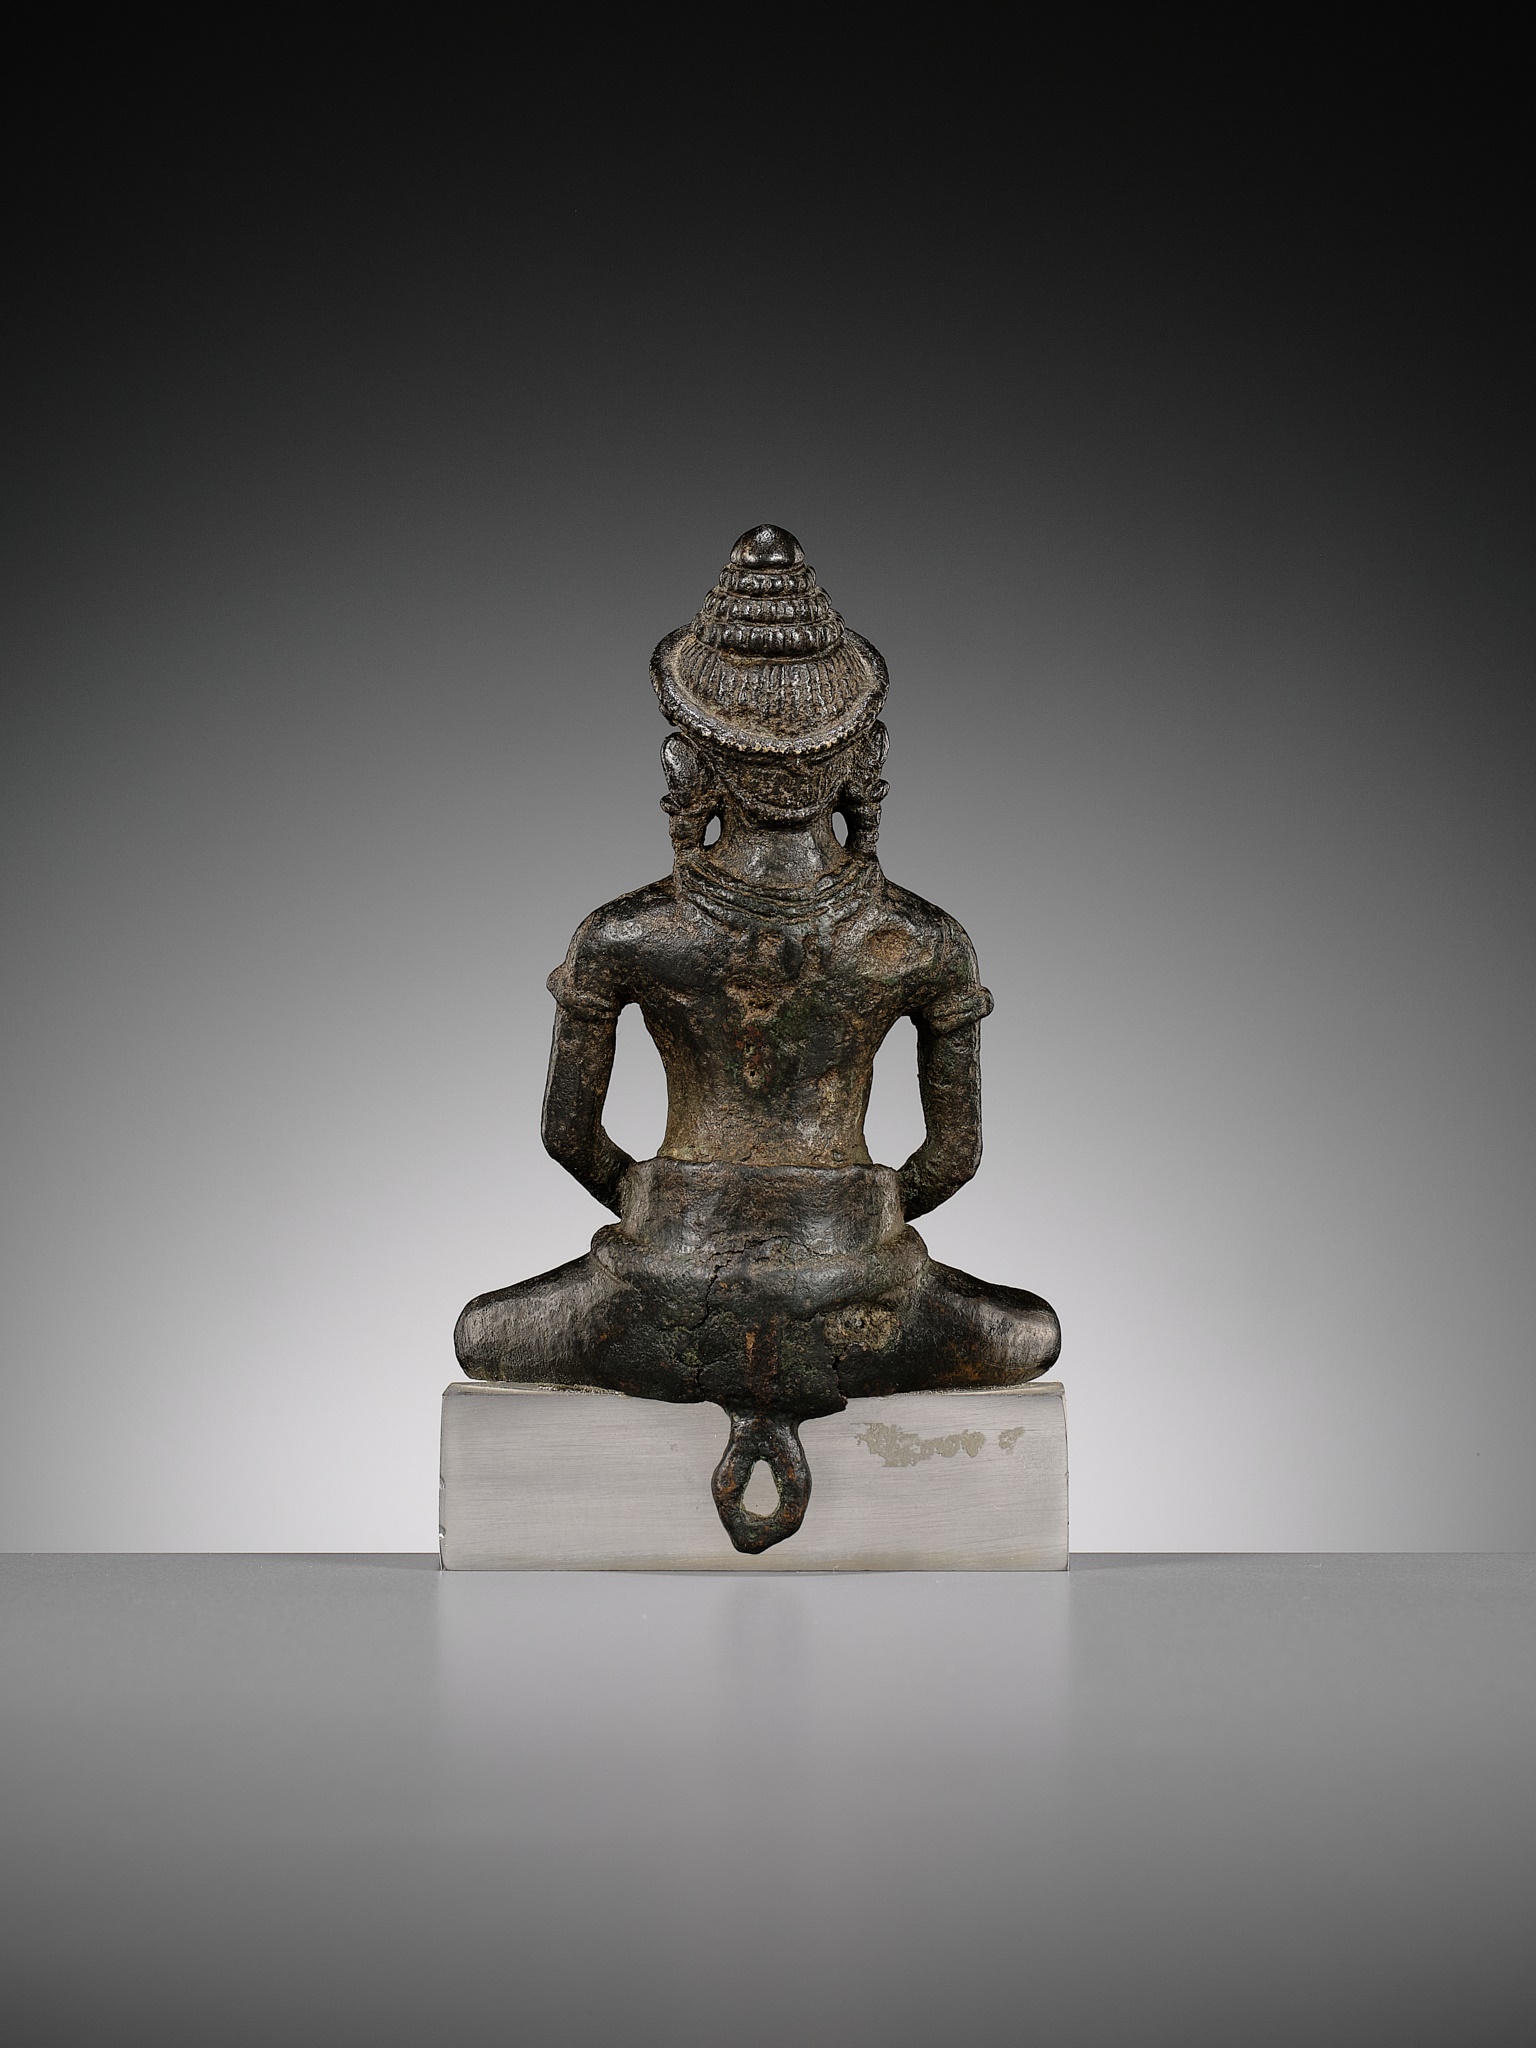 A BRONZE FIGURE OF BUDDHA, ANGKOR PERIOD, KHMER EMPIRE, 12TH CENTURY - Image 7 of 9